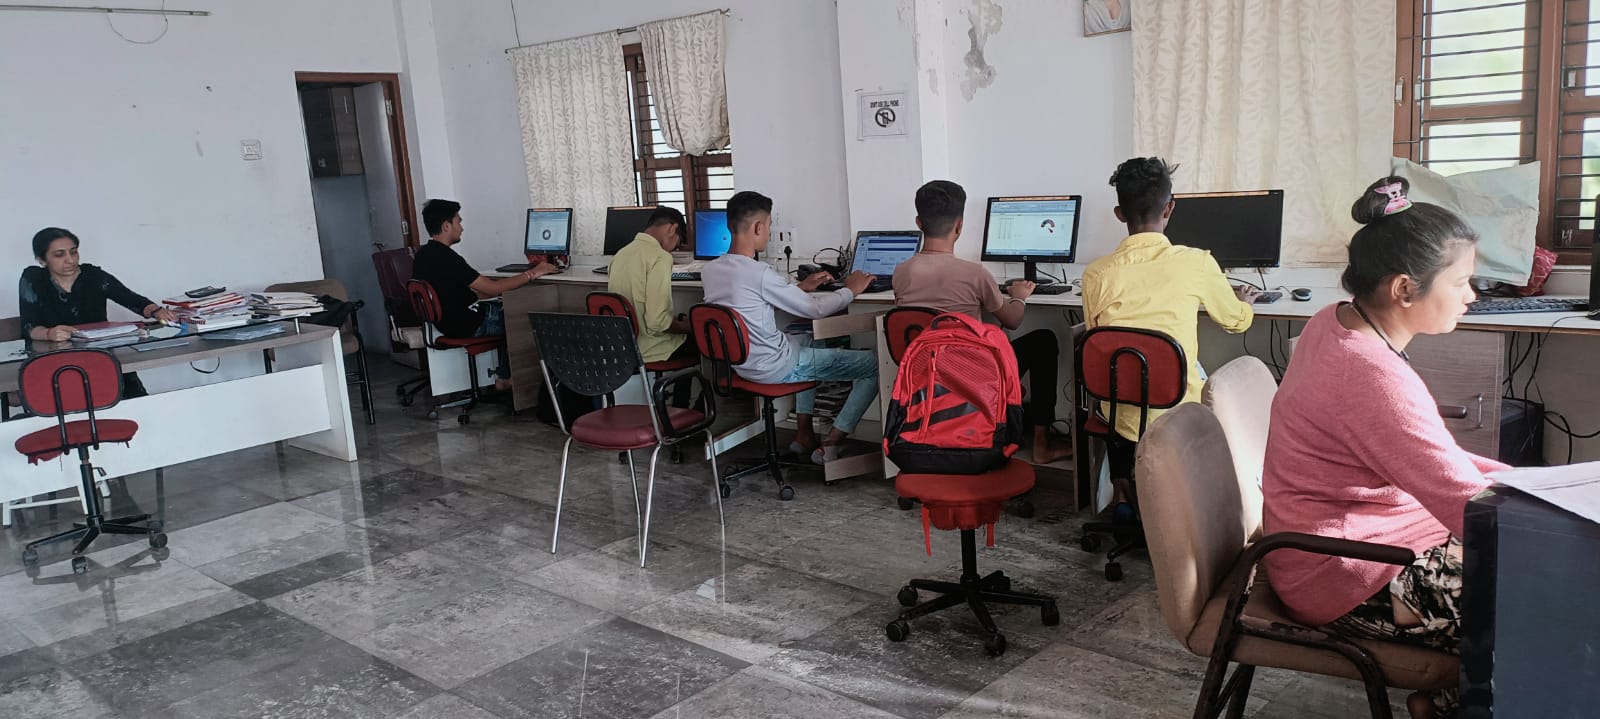 BHACHAU NICT COMPUTER